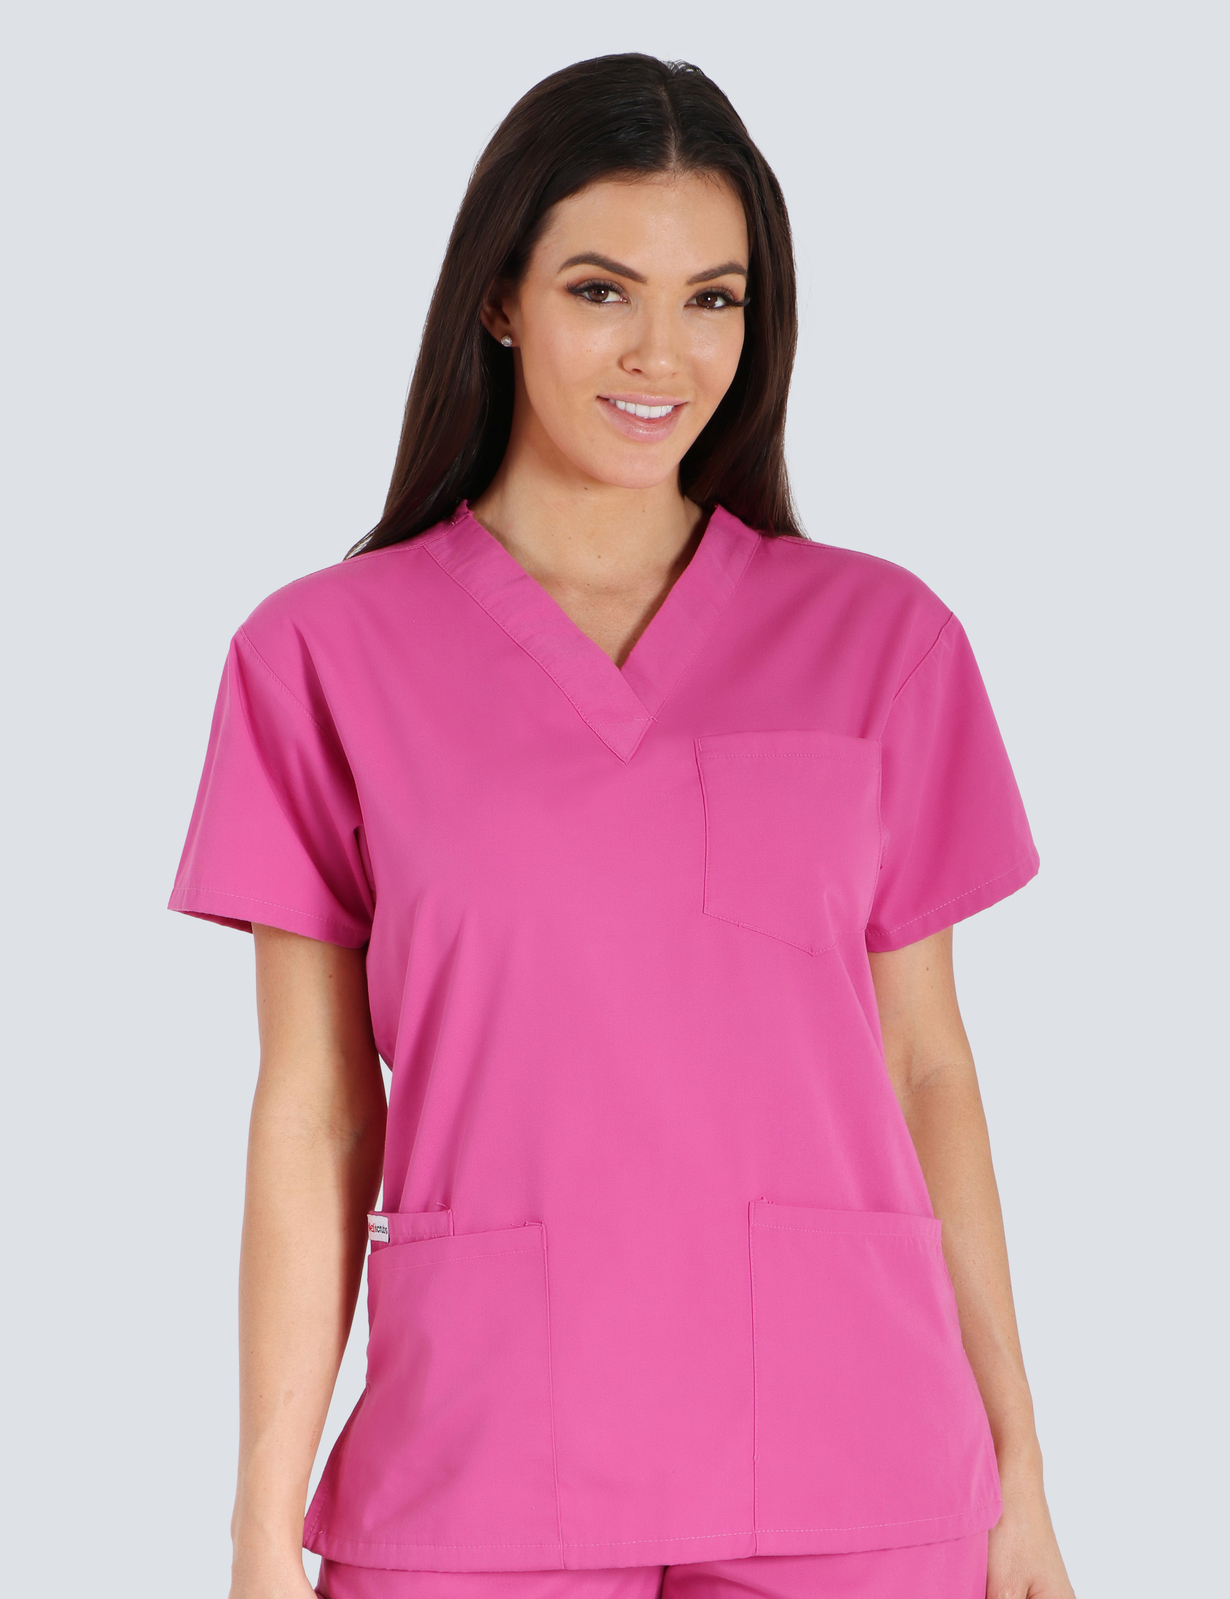 Queensland Children's Hospital Emergency Department Nurse Practitioner Uniform Top Bundle  (4 Pocket Top  in Pink  incl Logos)